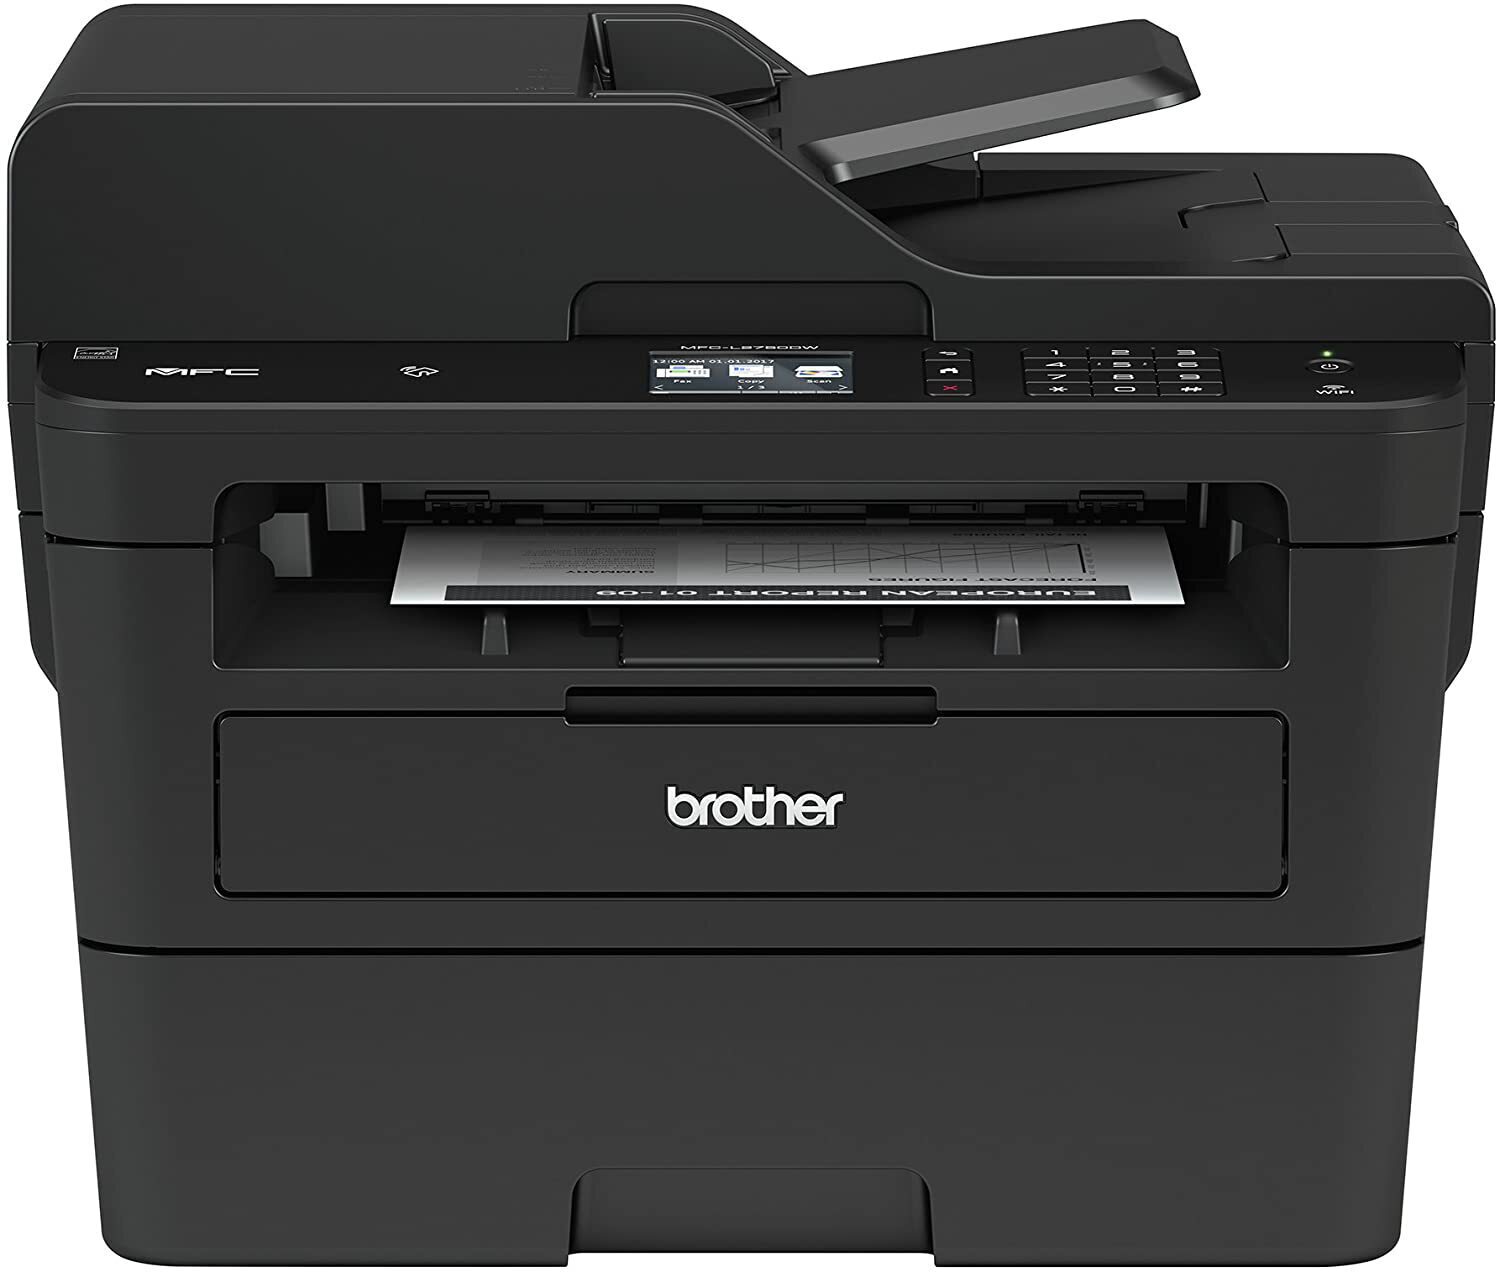 Brother MFC-L2750DW Printer